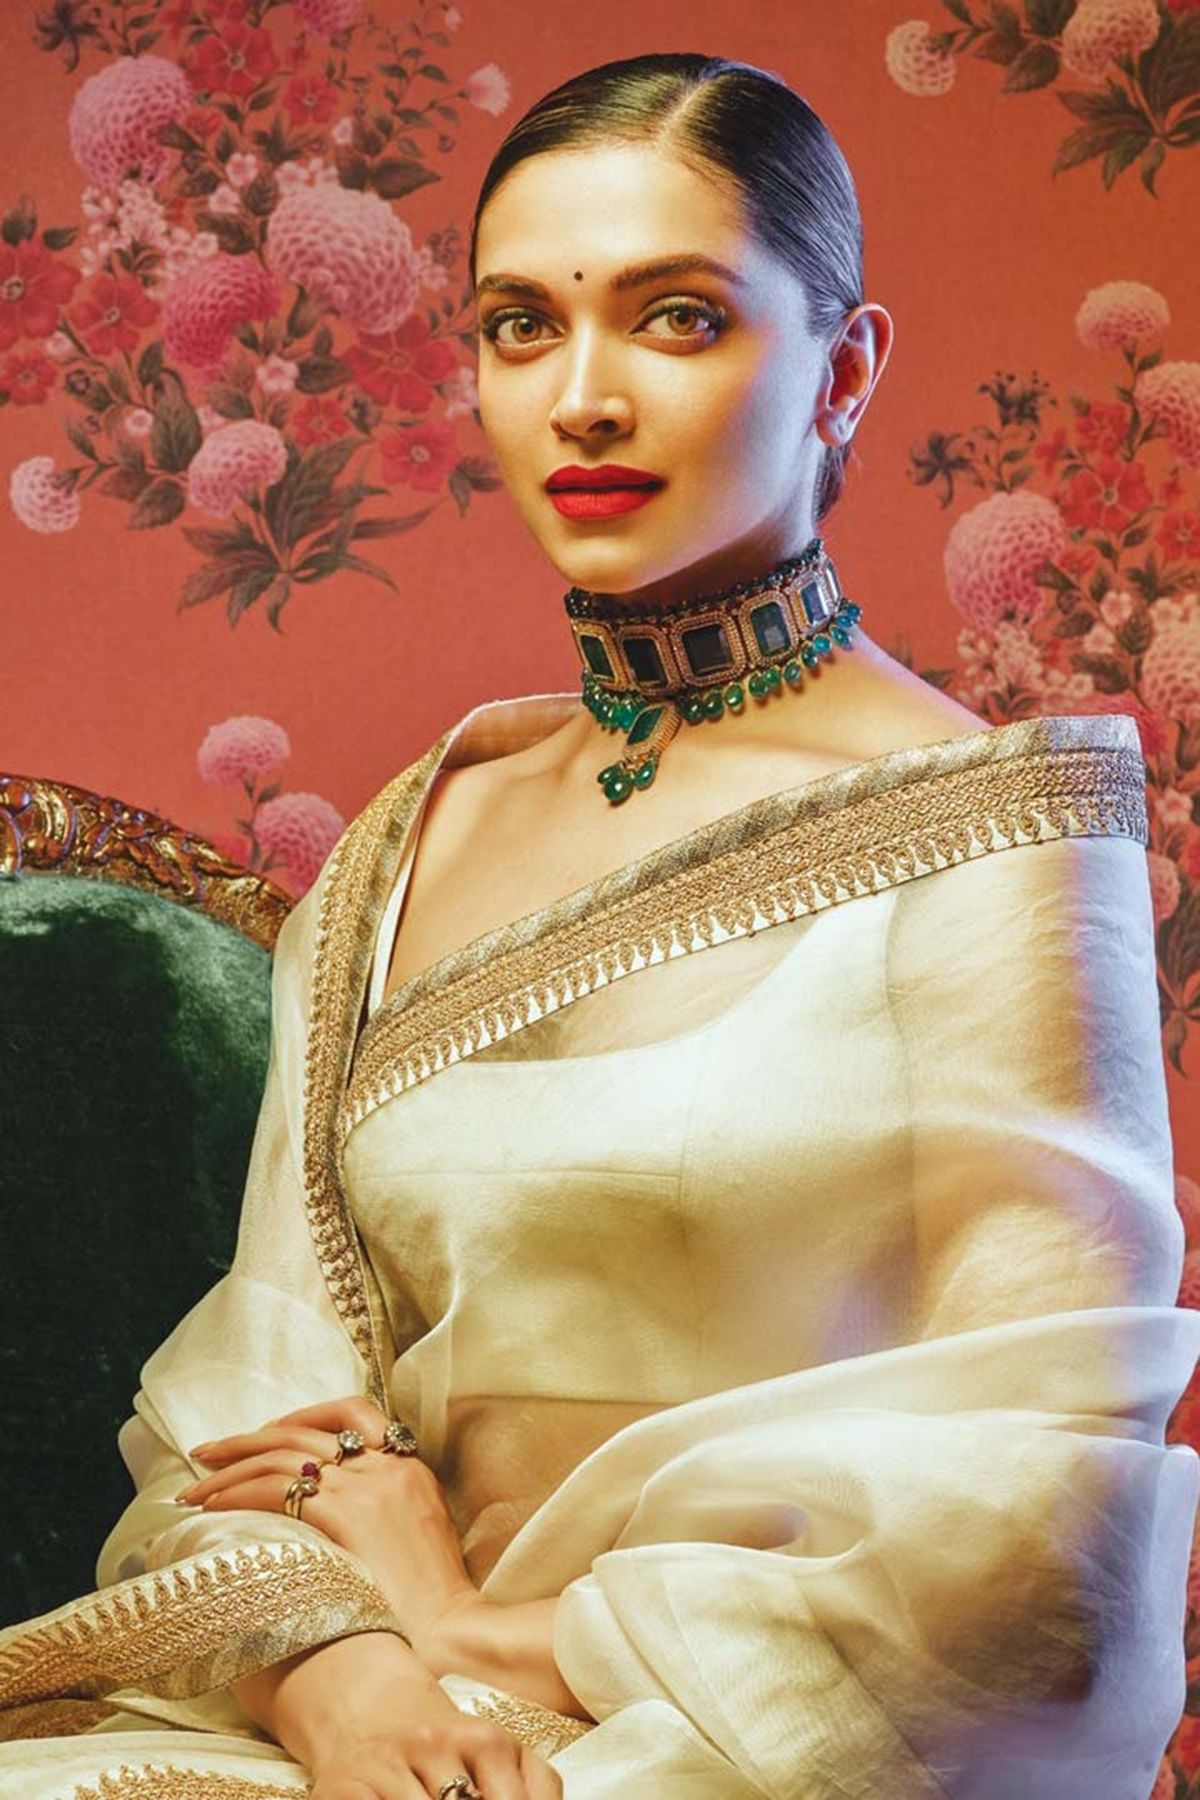 Deepika Padukone most beautiful in saree and jewellery mobile